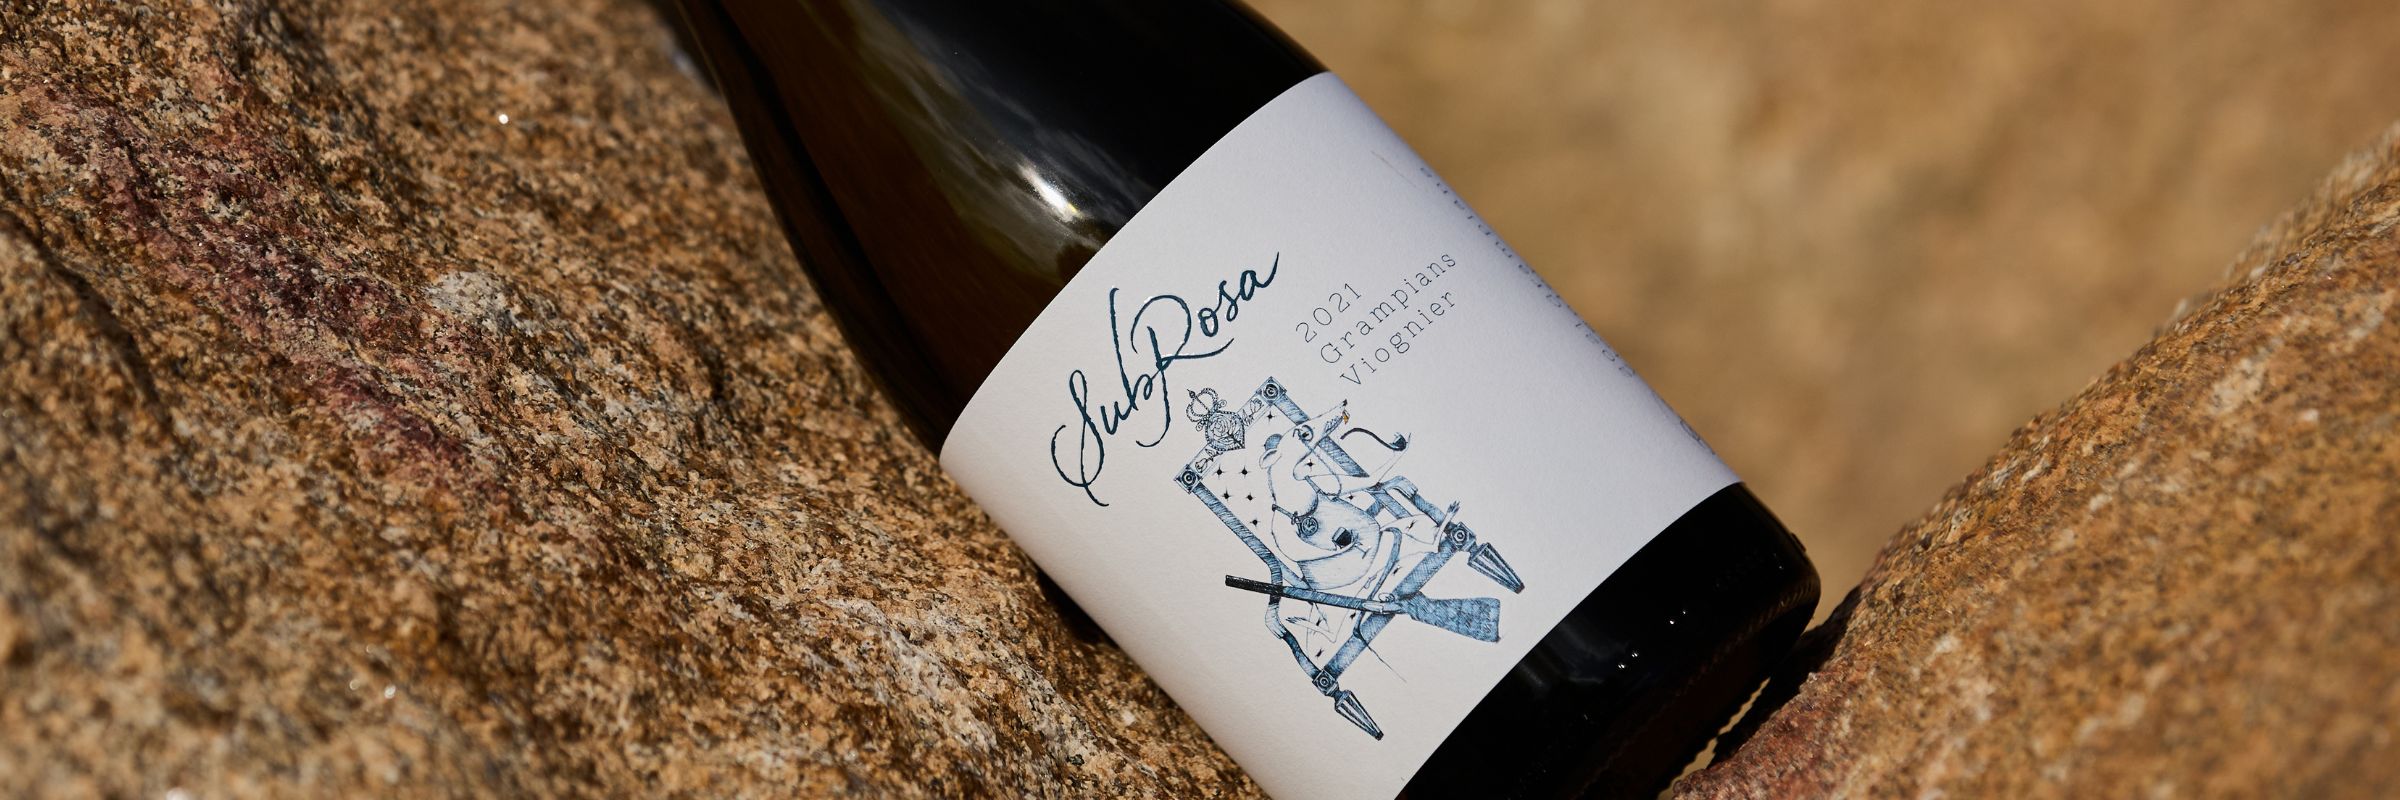 bottle of subrosa viognier lying on the granite rocks in the grampians wine region